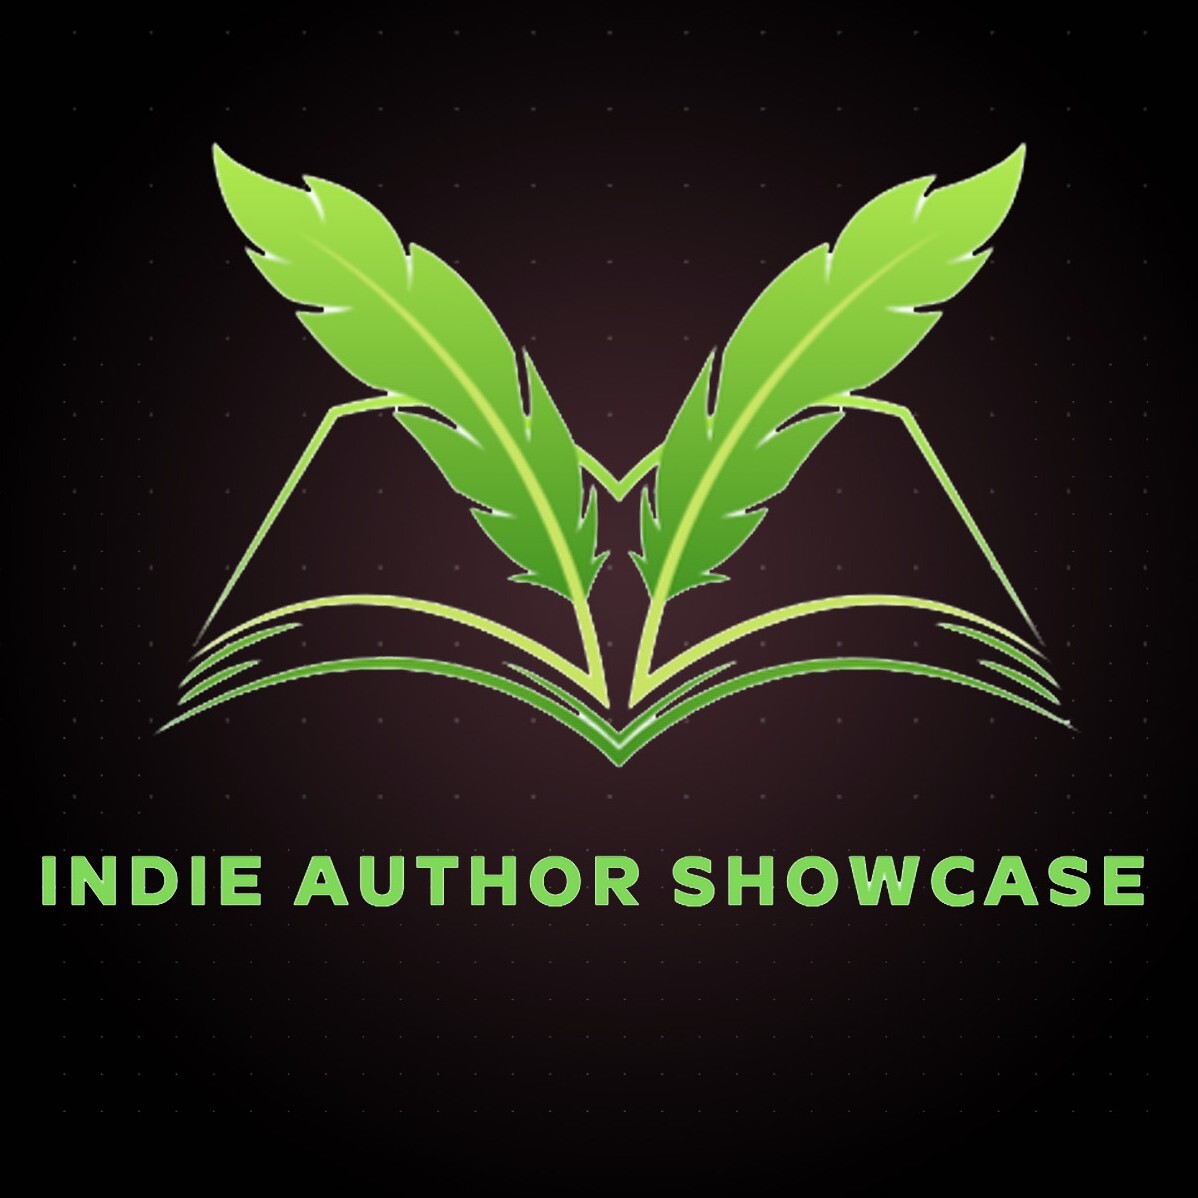 The Indie Author Showcase